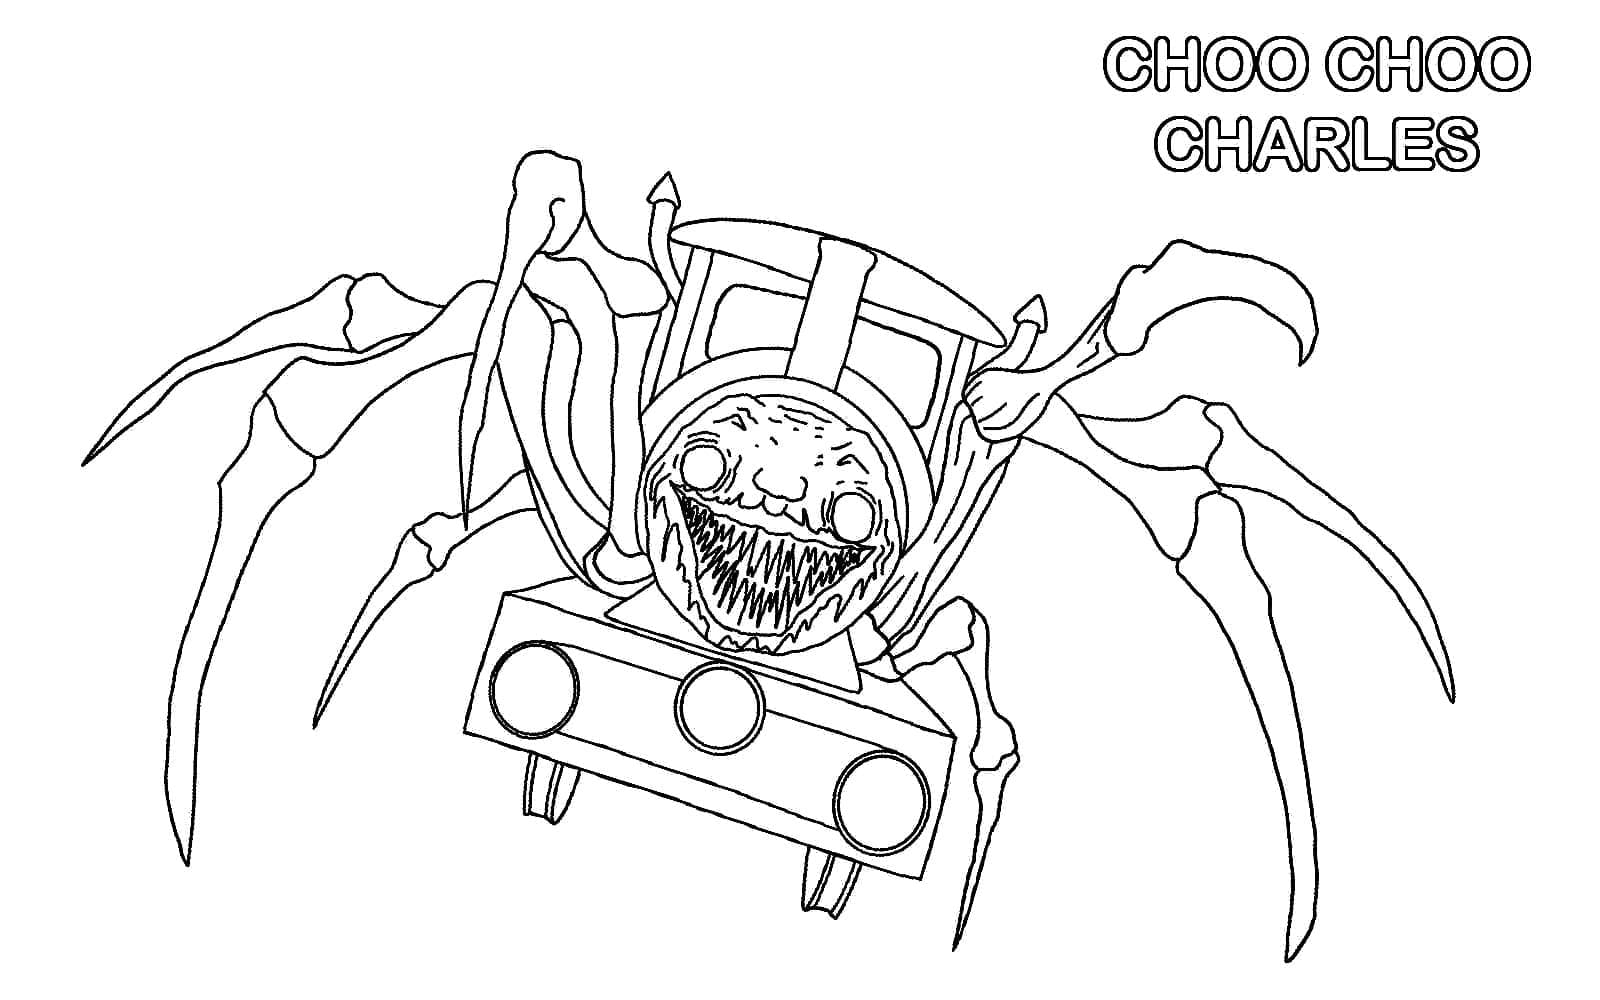 Choo-Choo Charles - Sheet 1 coloring page - Download, Print or Color ...